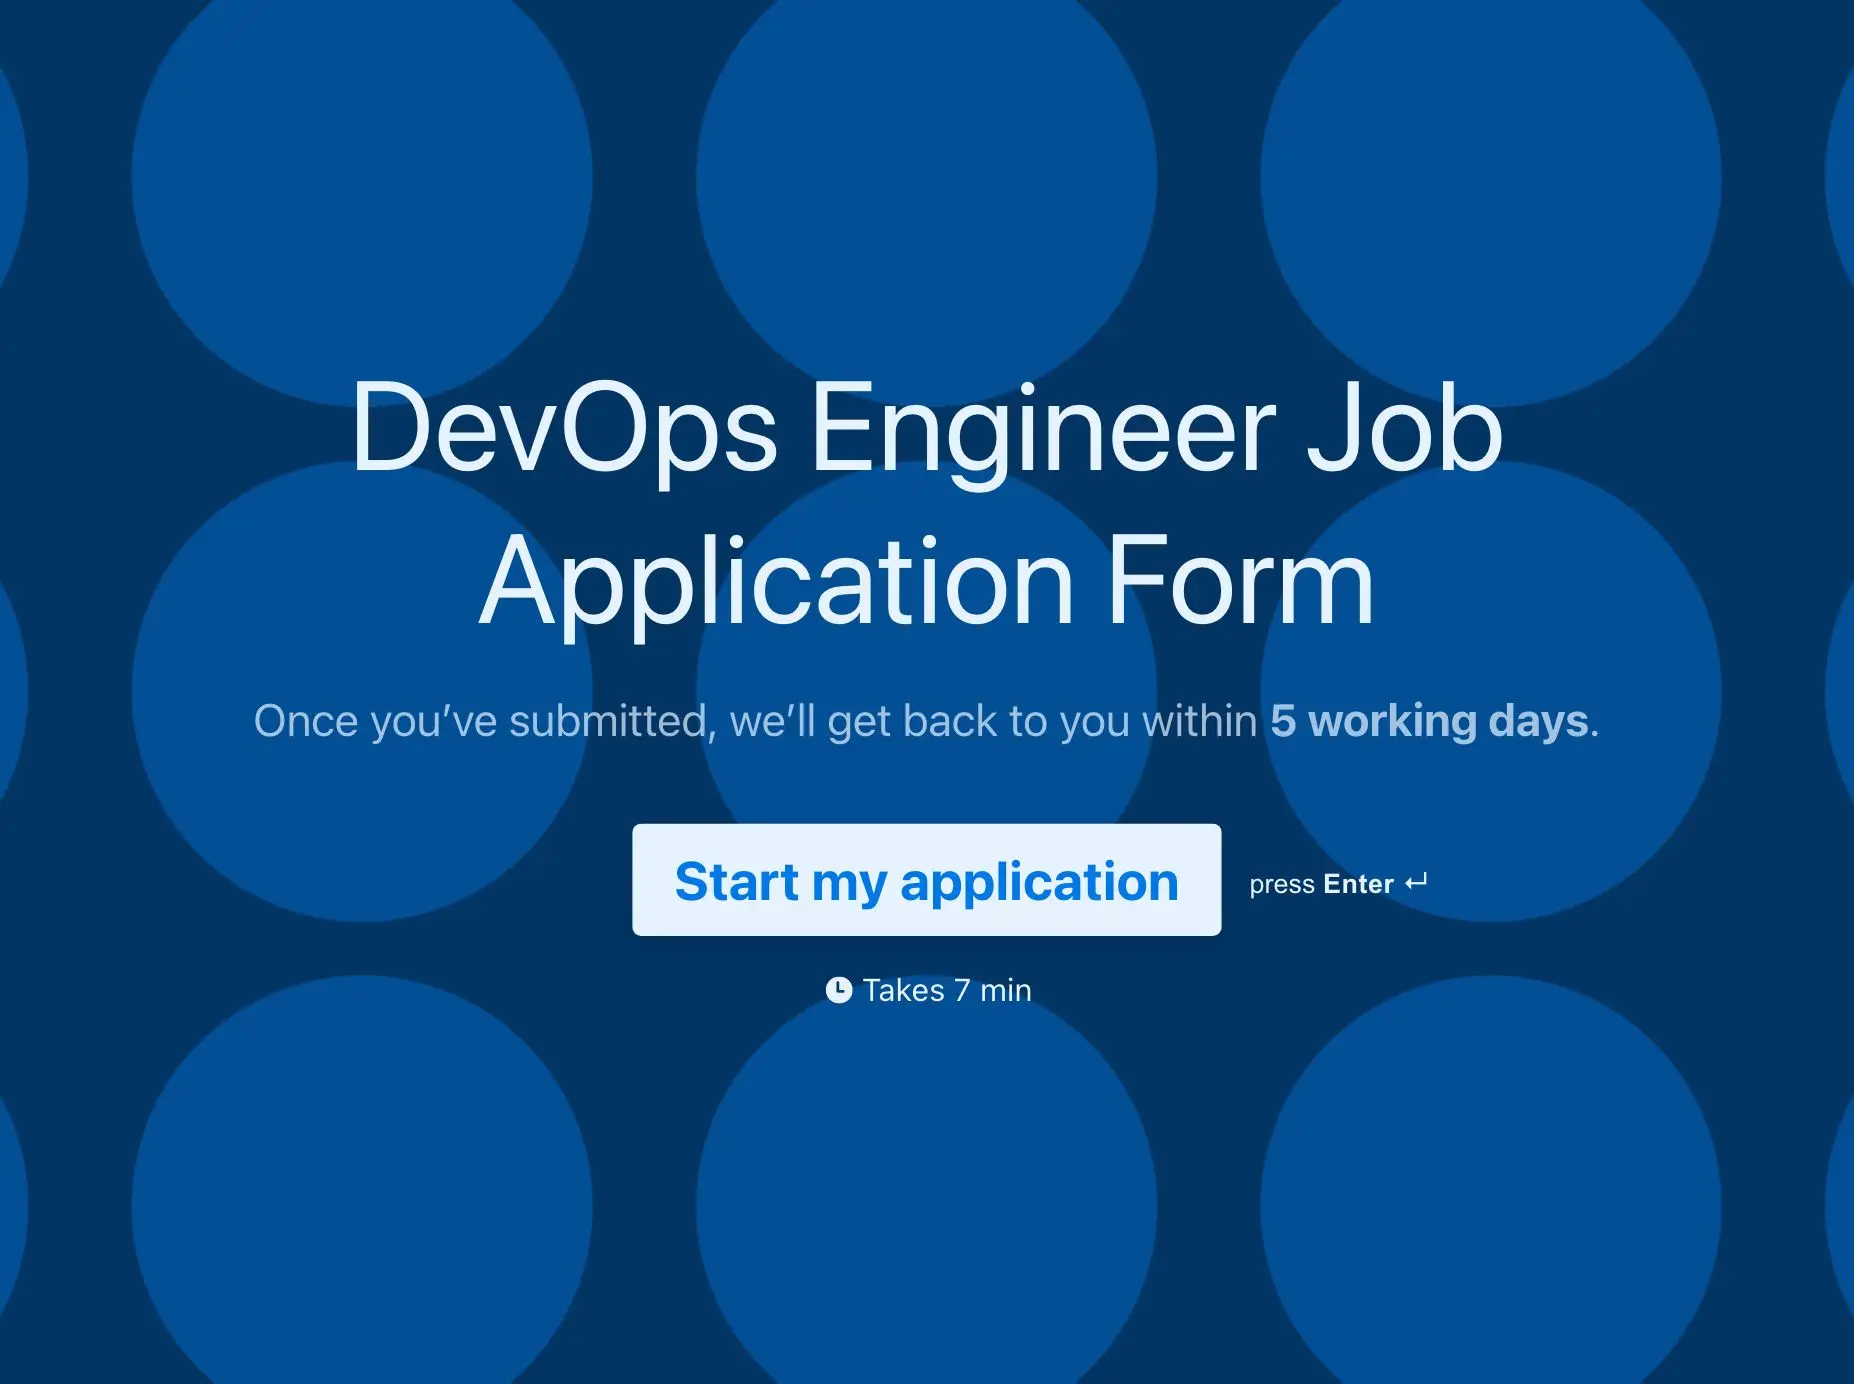 DevOps Engineer Job Application Form Template Hero